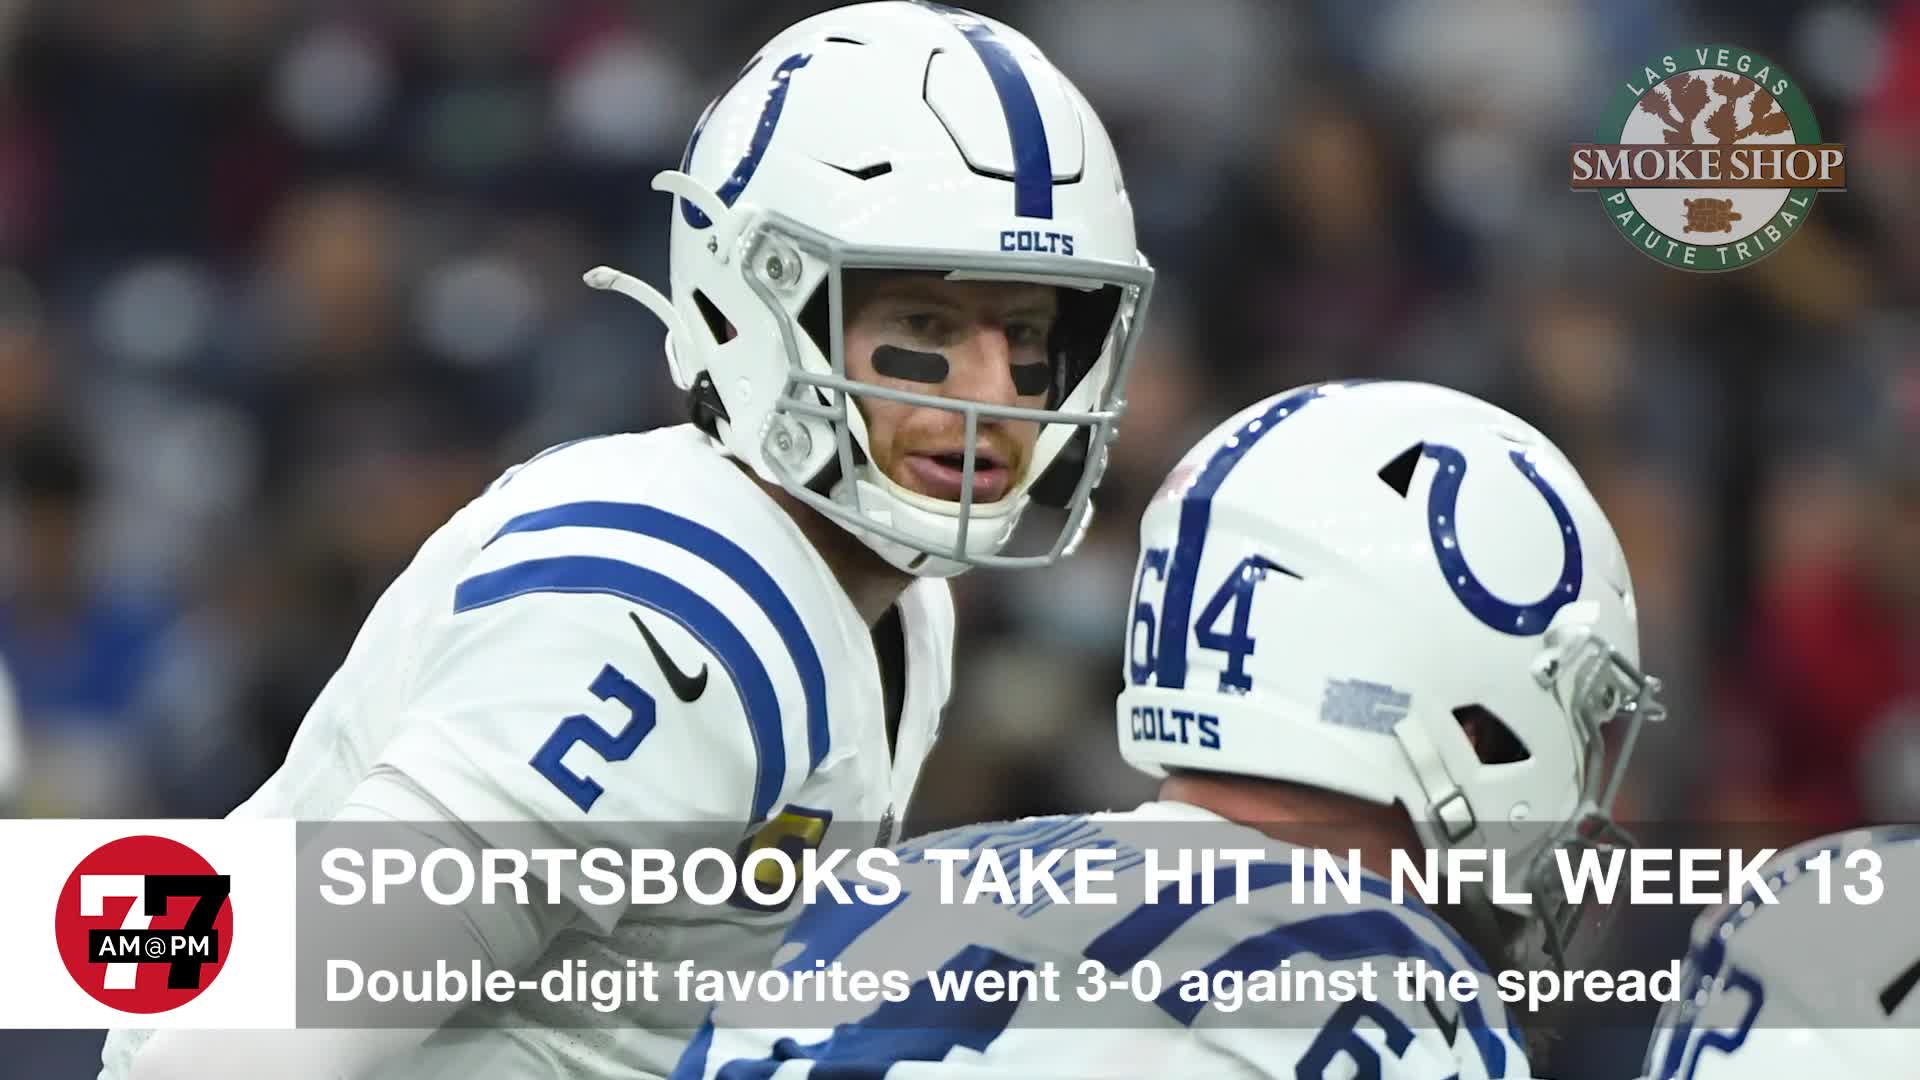 Sportsbooks take hit in NFL Week 13